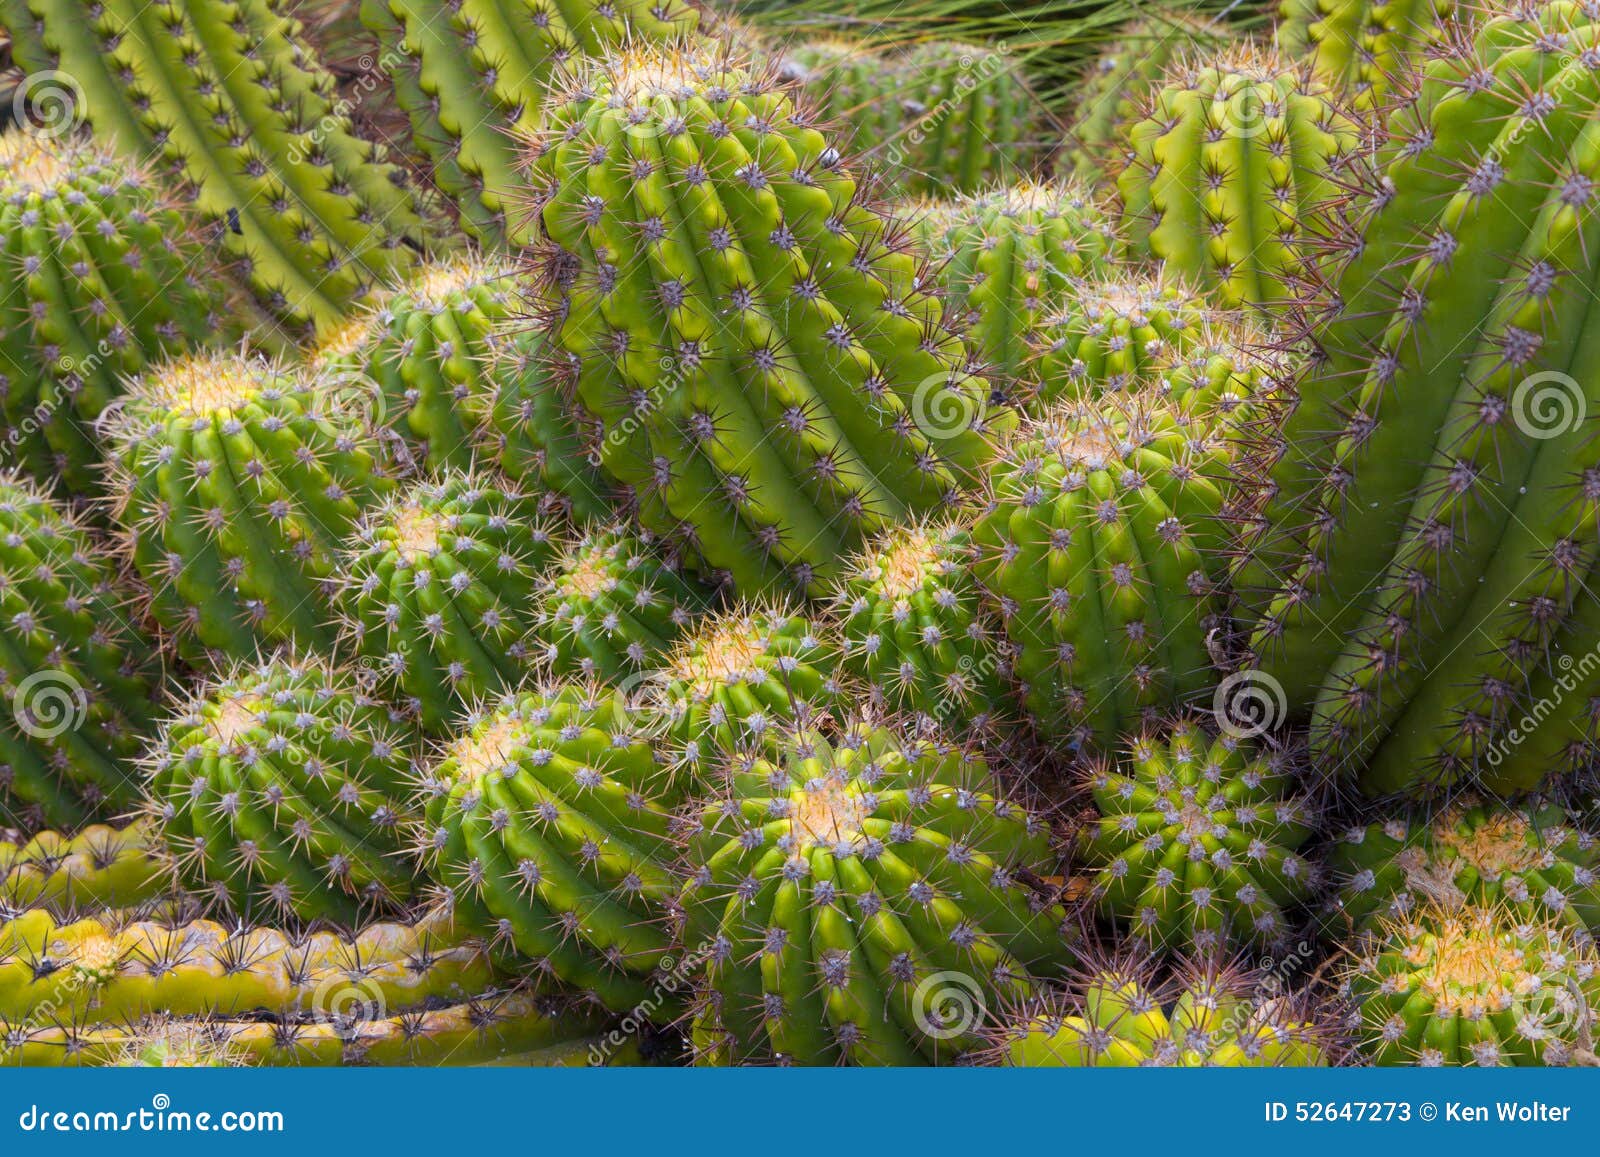 grouping of green barrel cactus